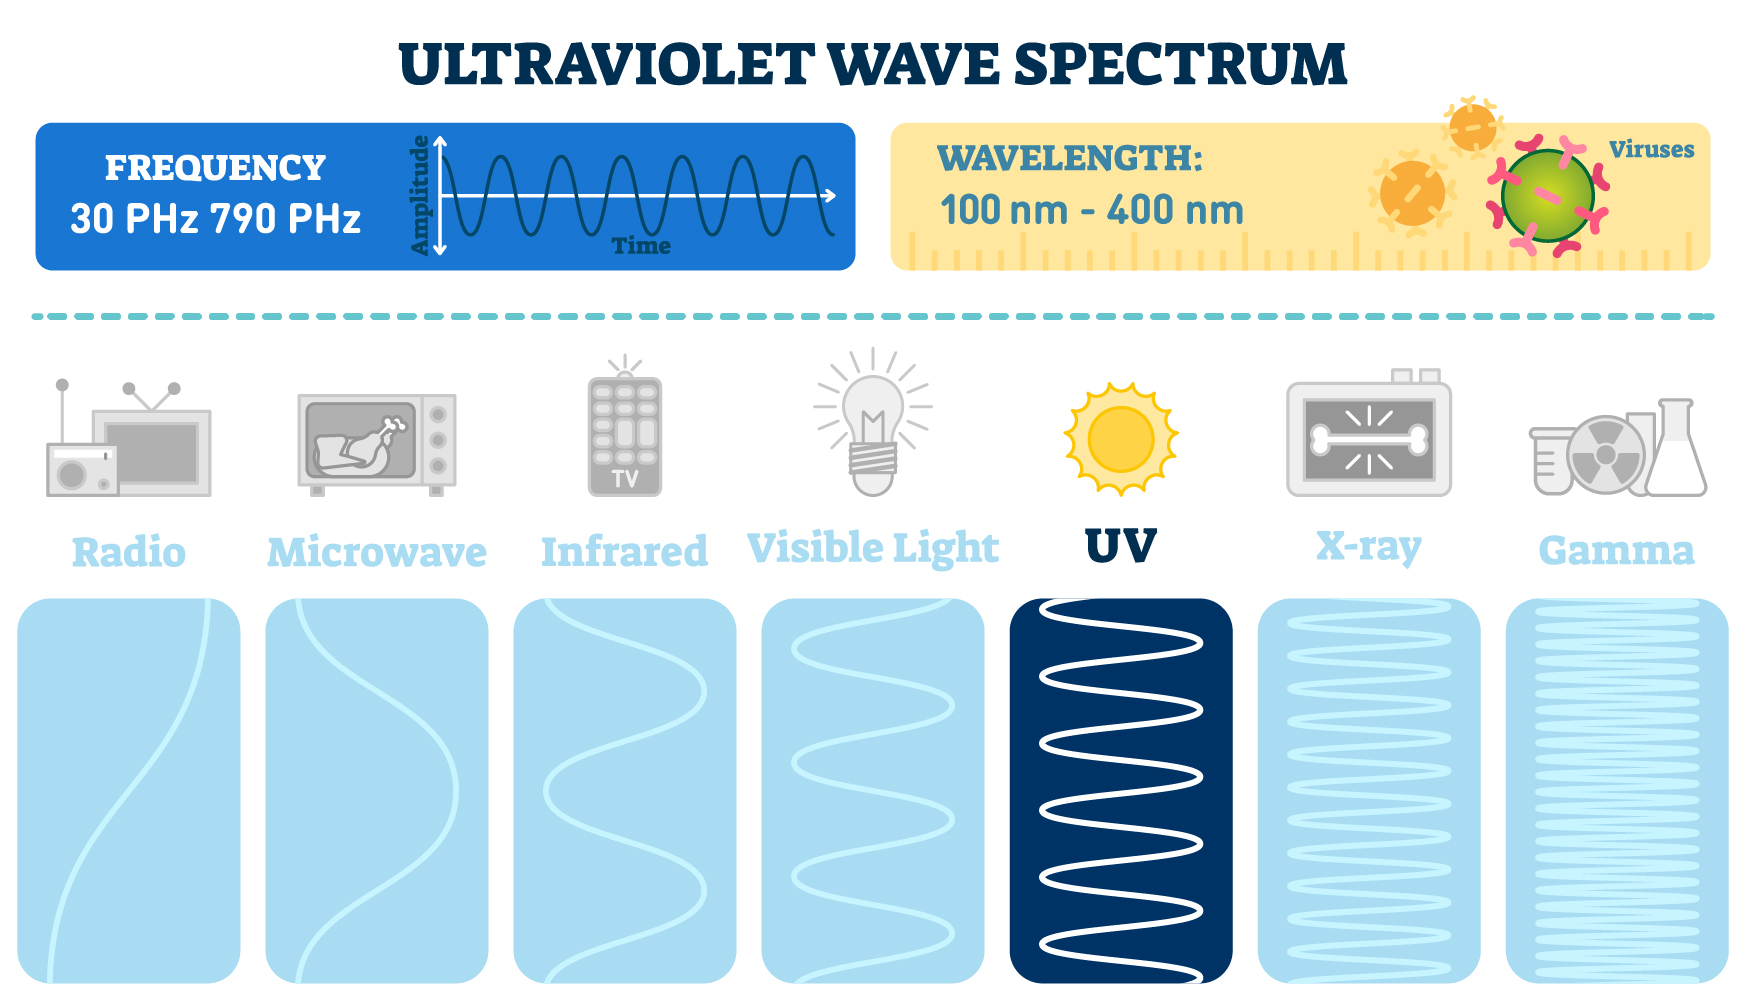 uv-c wavelength spectrum